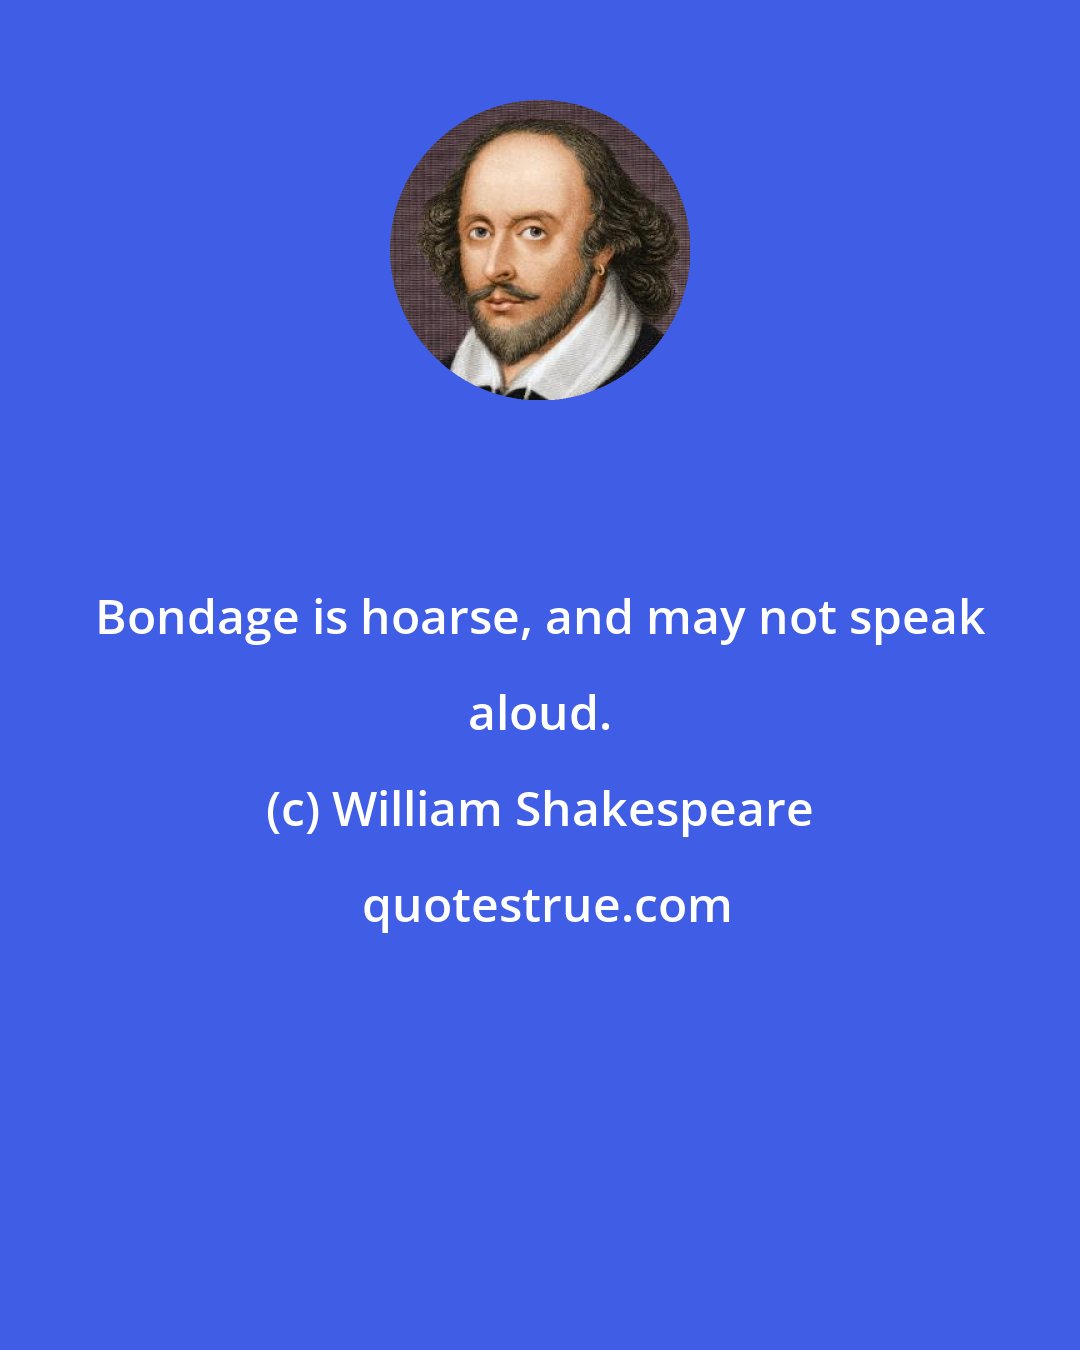 William Shakespeare: Bondage is hoarse, and may not speak aloud.